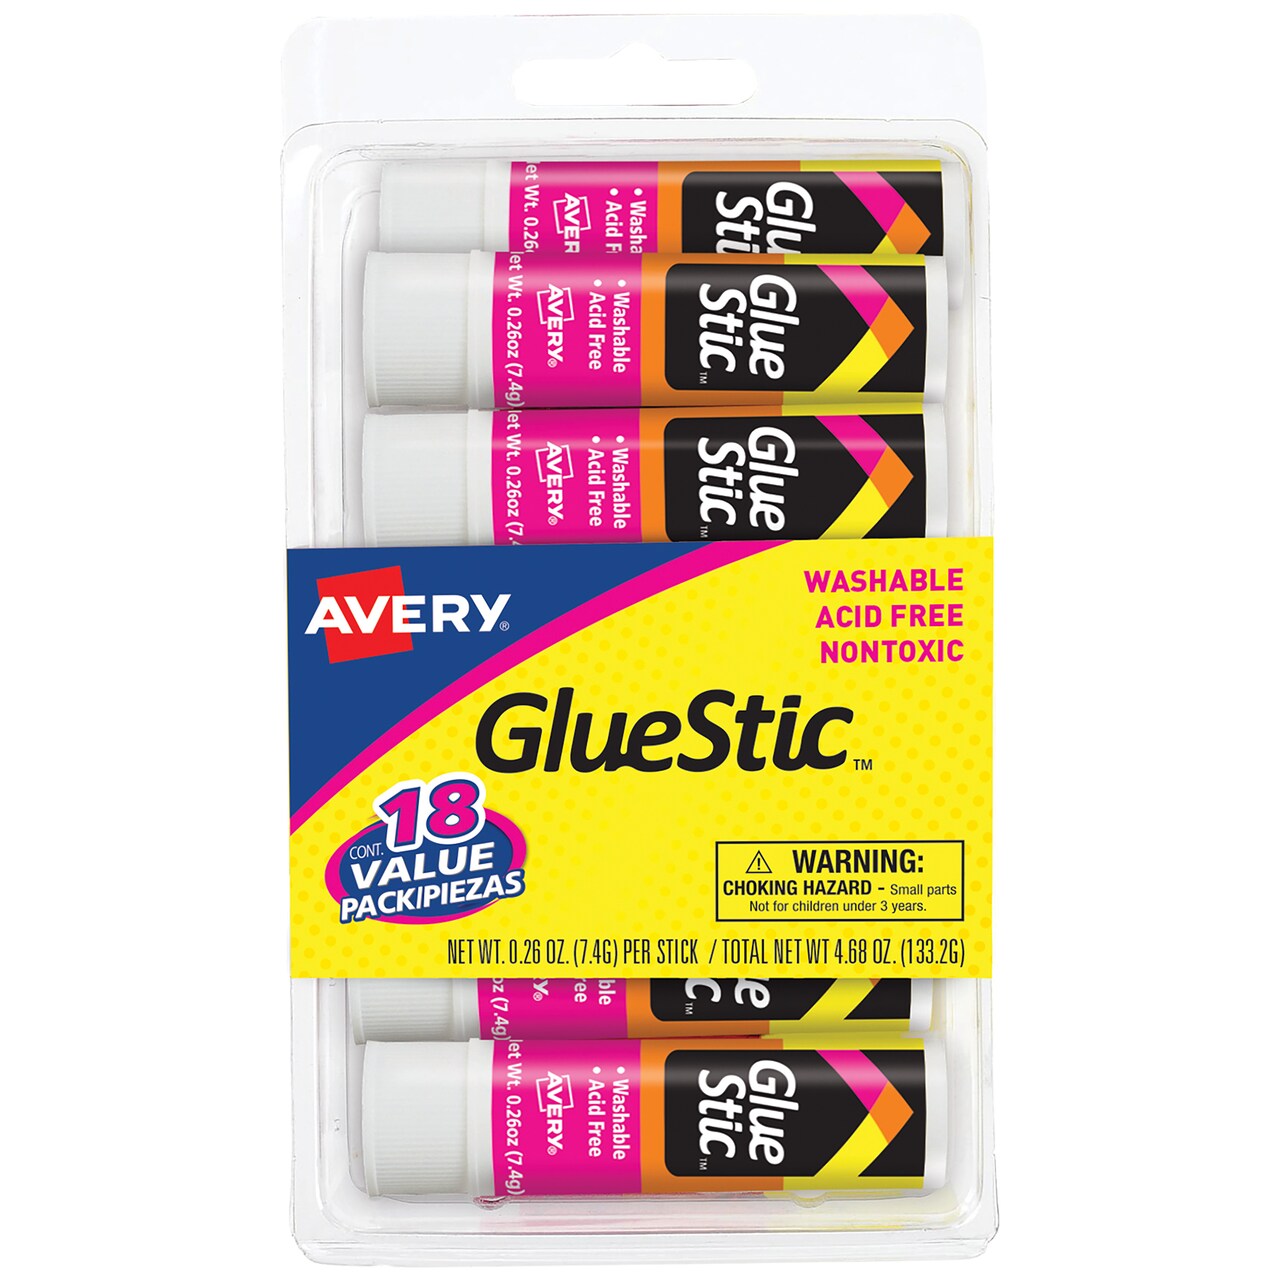 Avery Glue Stic Value Pack, White, Washable, Nontoxic, 0.26 oz., 18  Permanent Glue Sticks (98089)